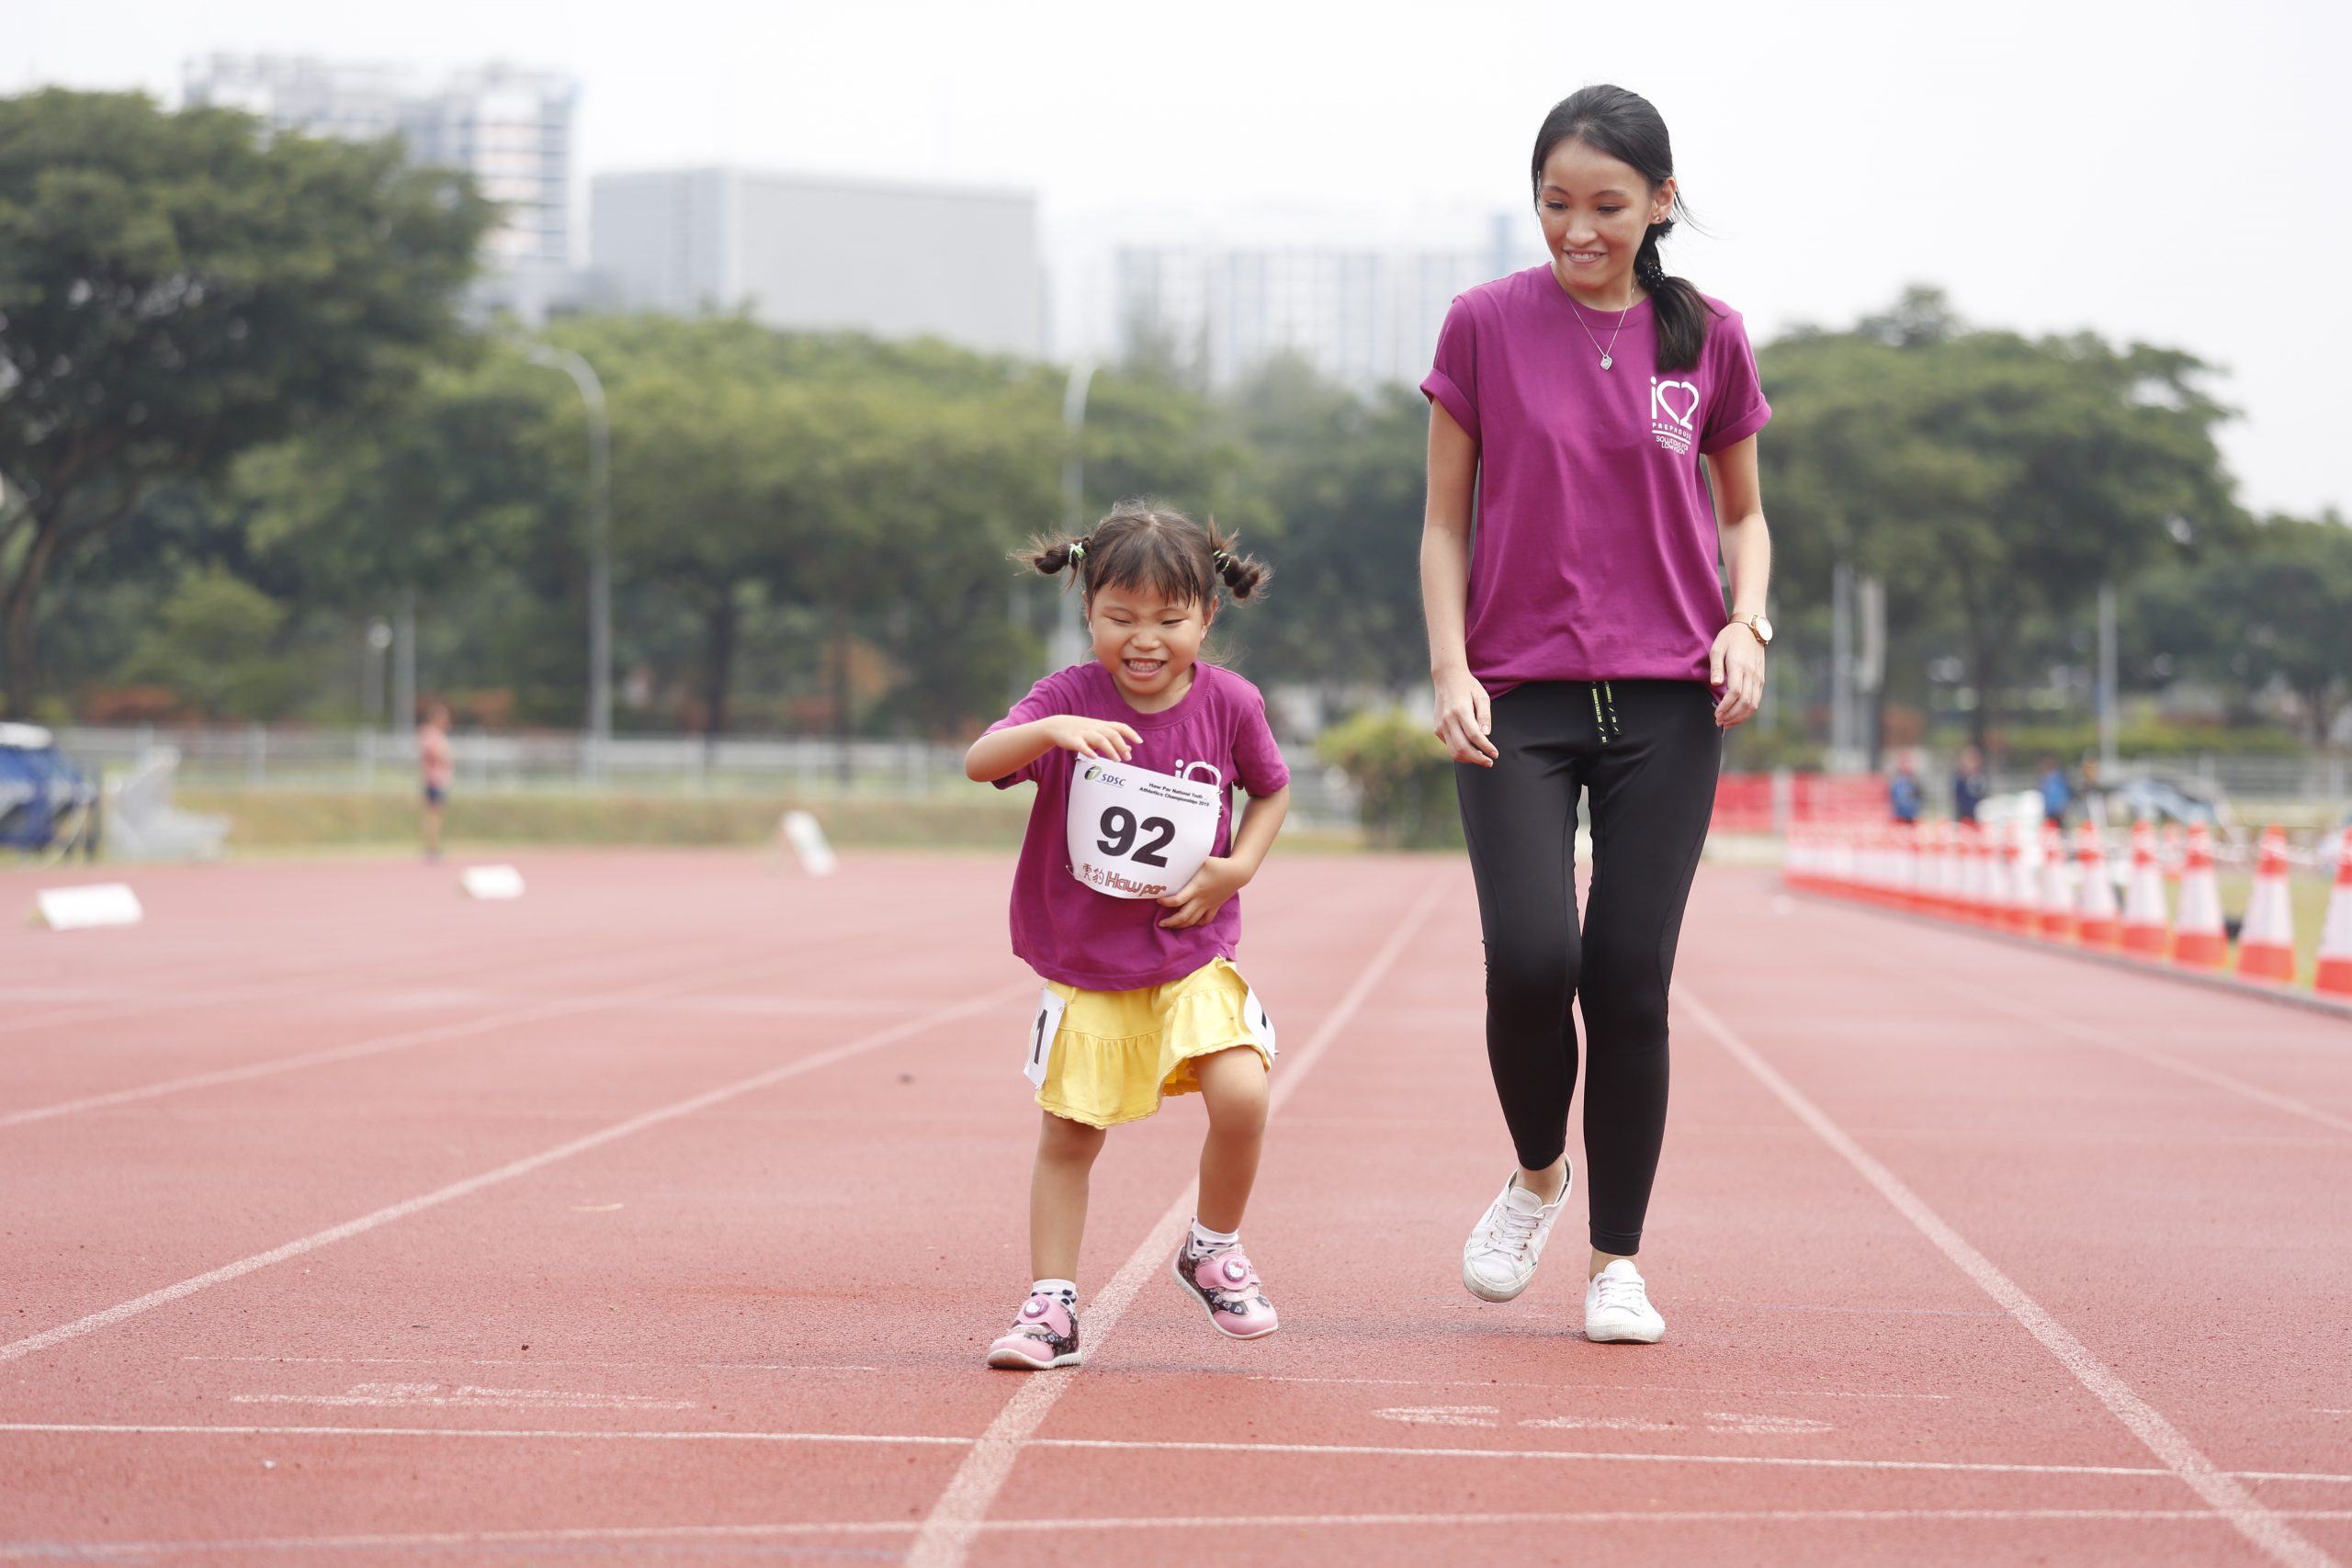 5-year-old Ruri Fuchu makes a solo dash to the finish line